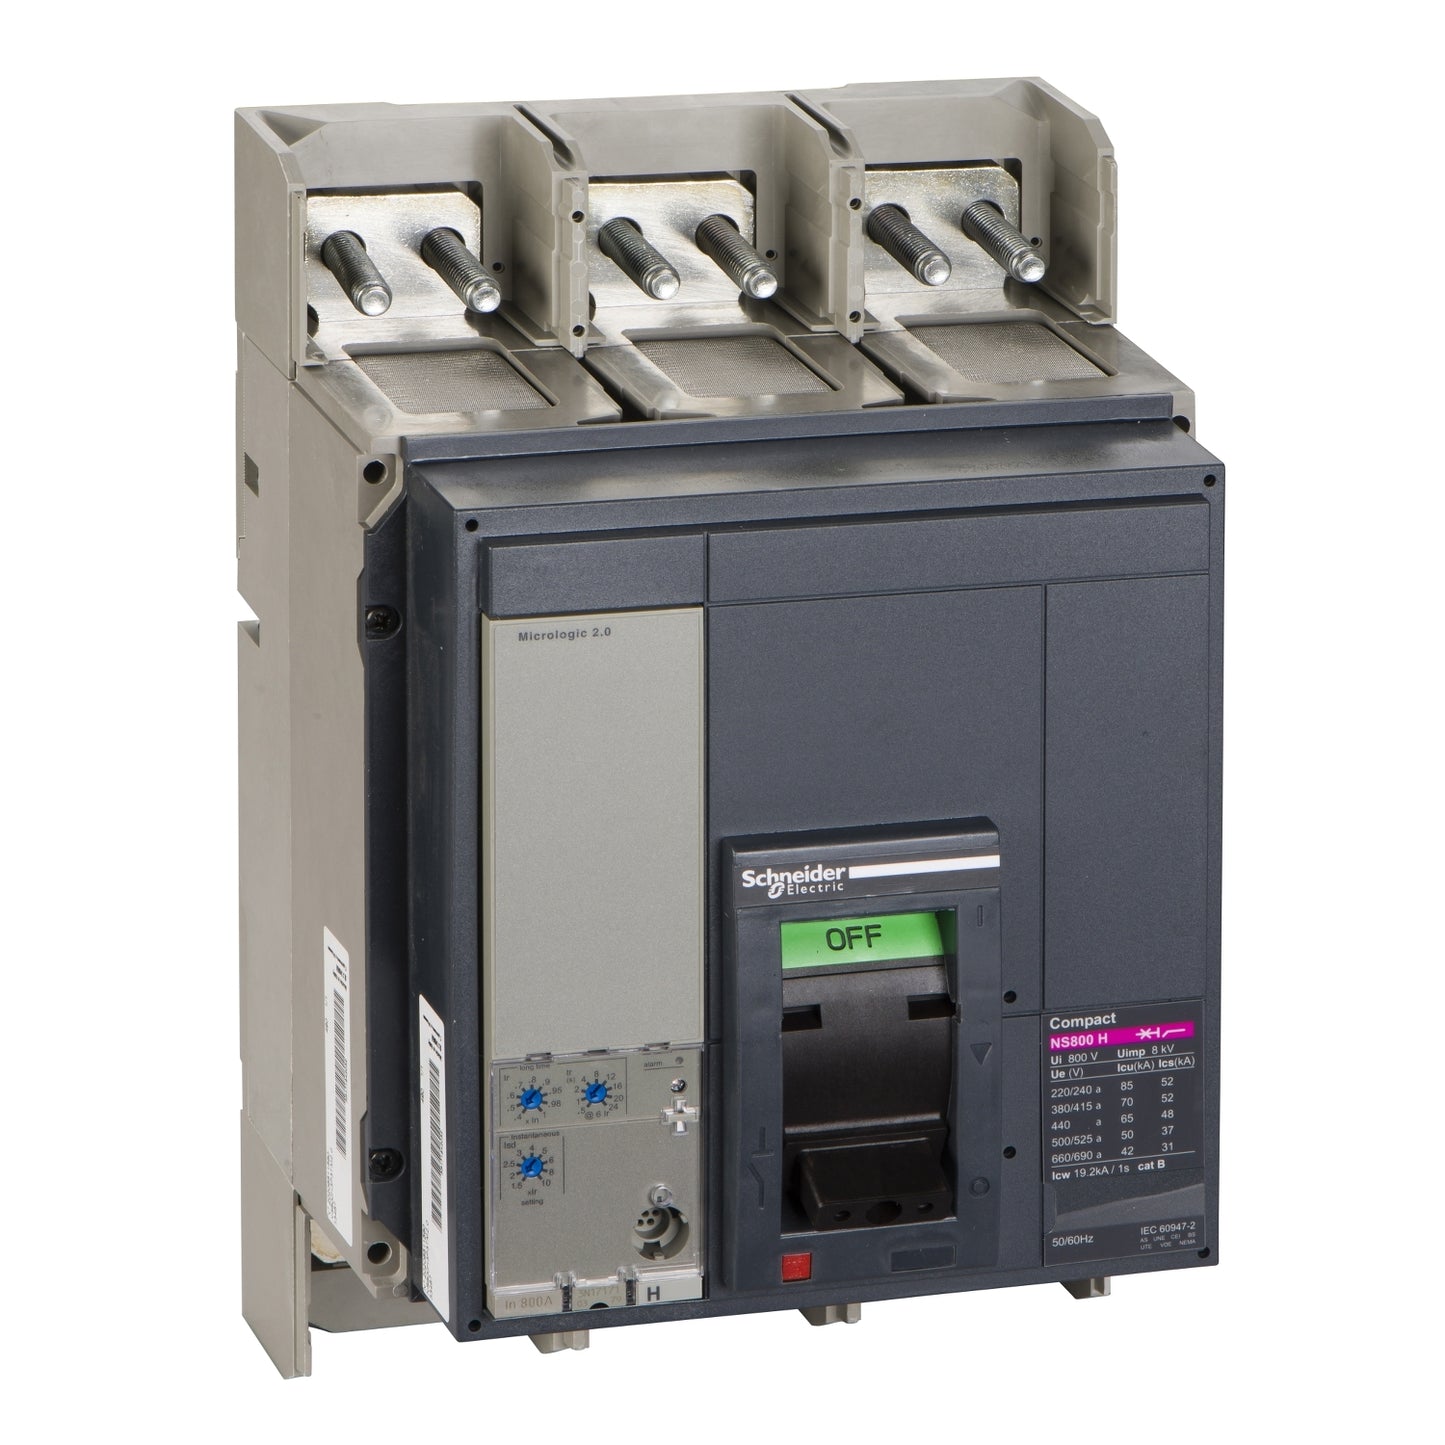 Compact NS - NS800H - Micrologic 2.0 - 800A - 70kA 380/415VAC (IEC60947-2) - 33467 - SCHNEIDER